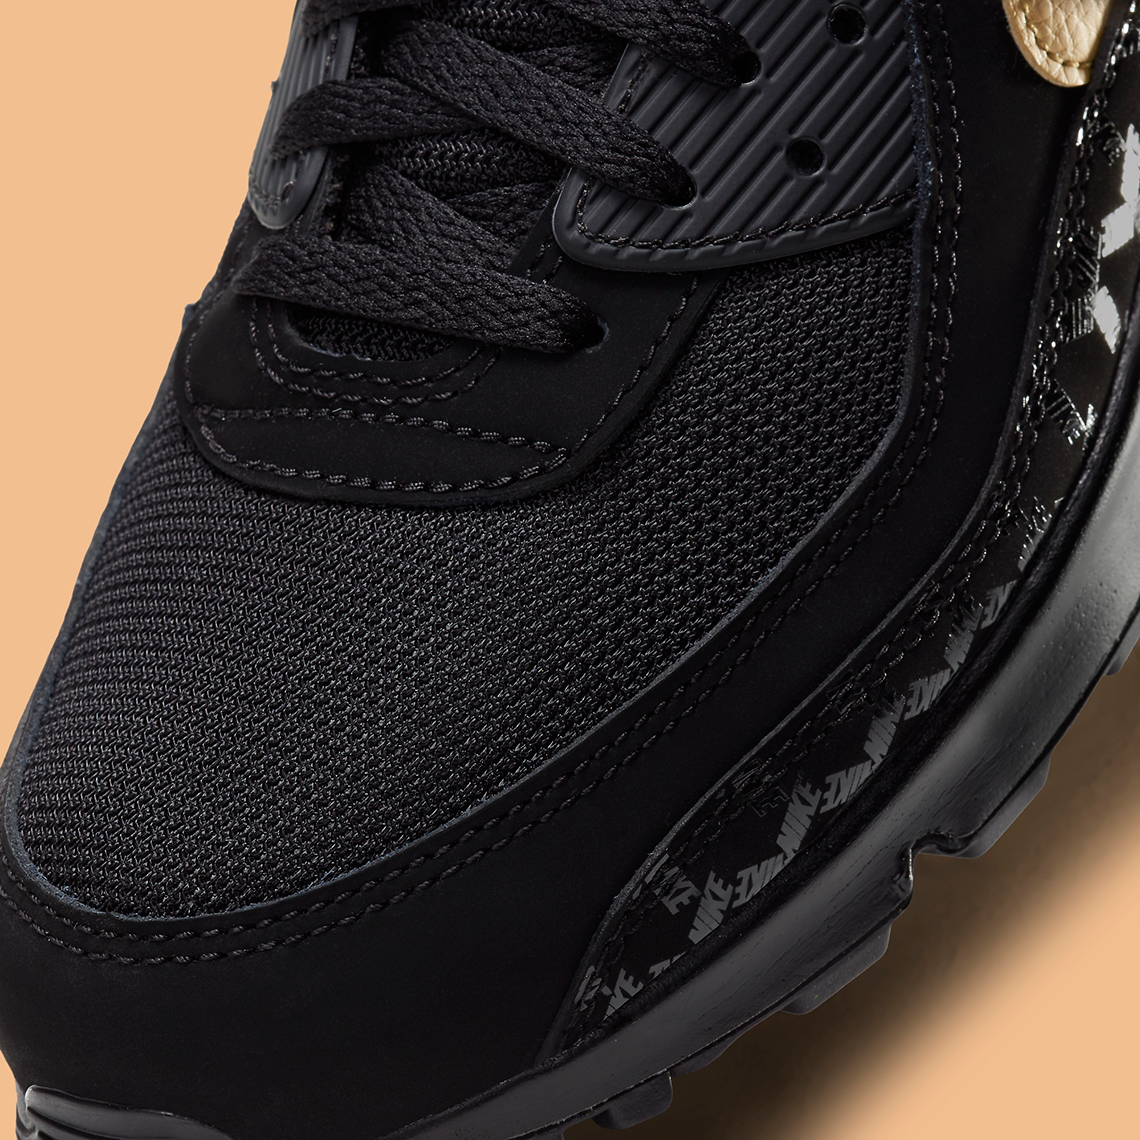 Nike Air Max 90 Black Gold DC4119-001 | SneakerNews.com